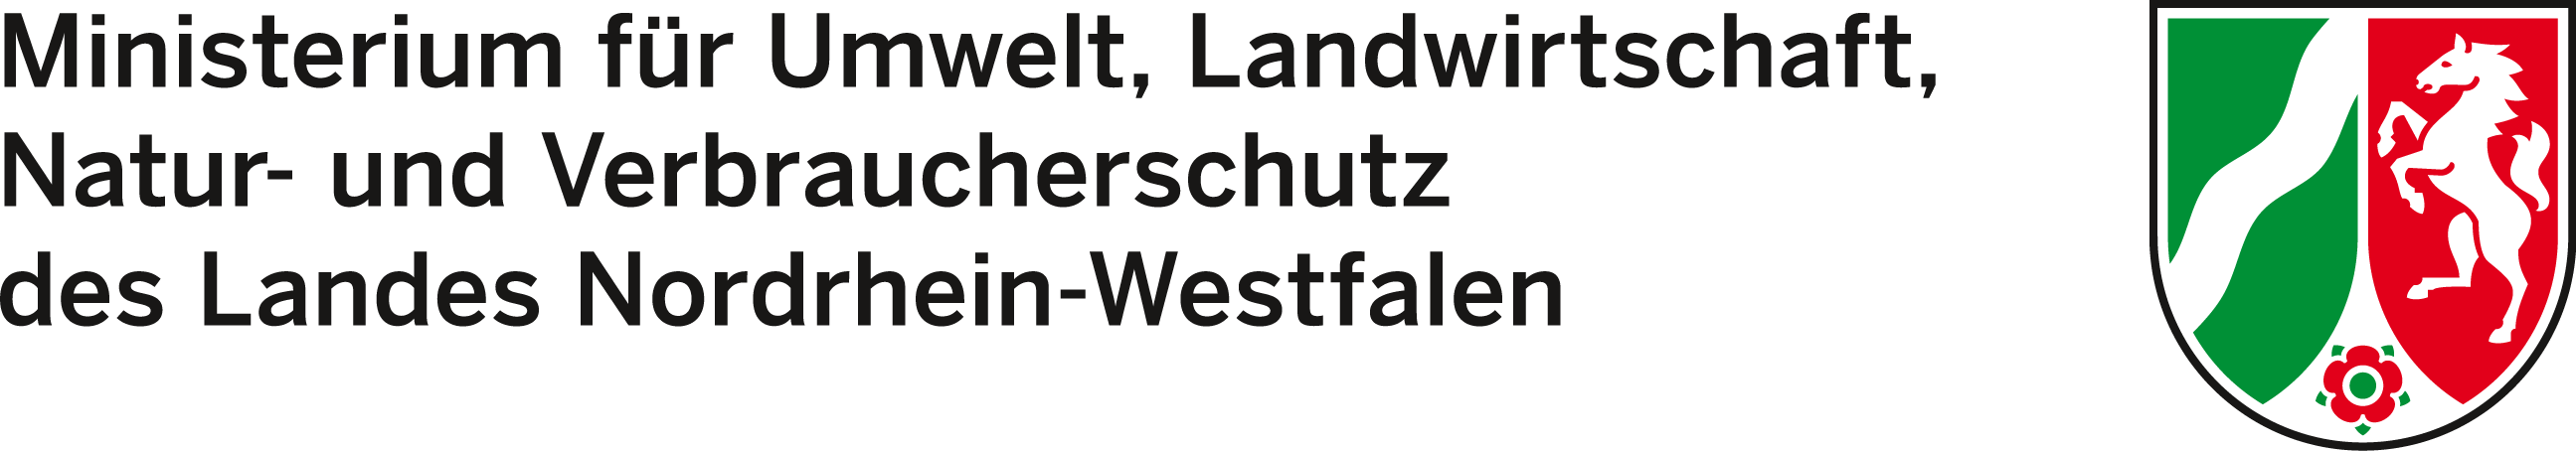 Logo MULNV NRW